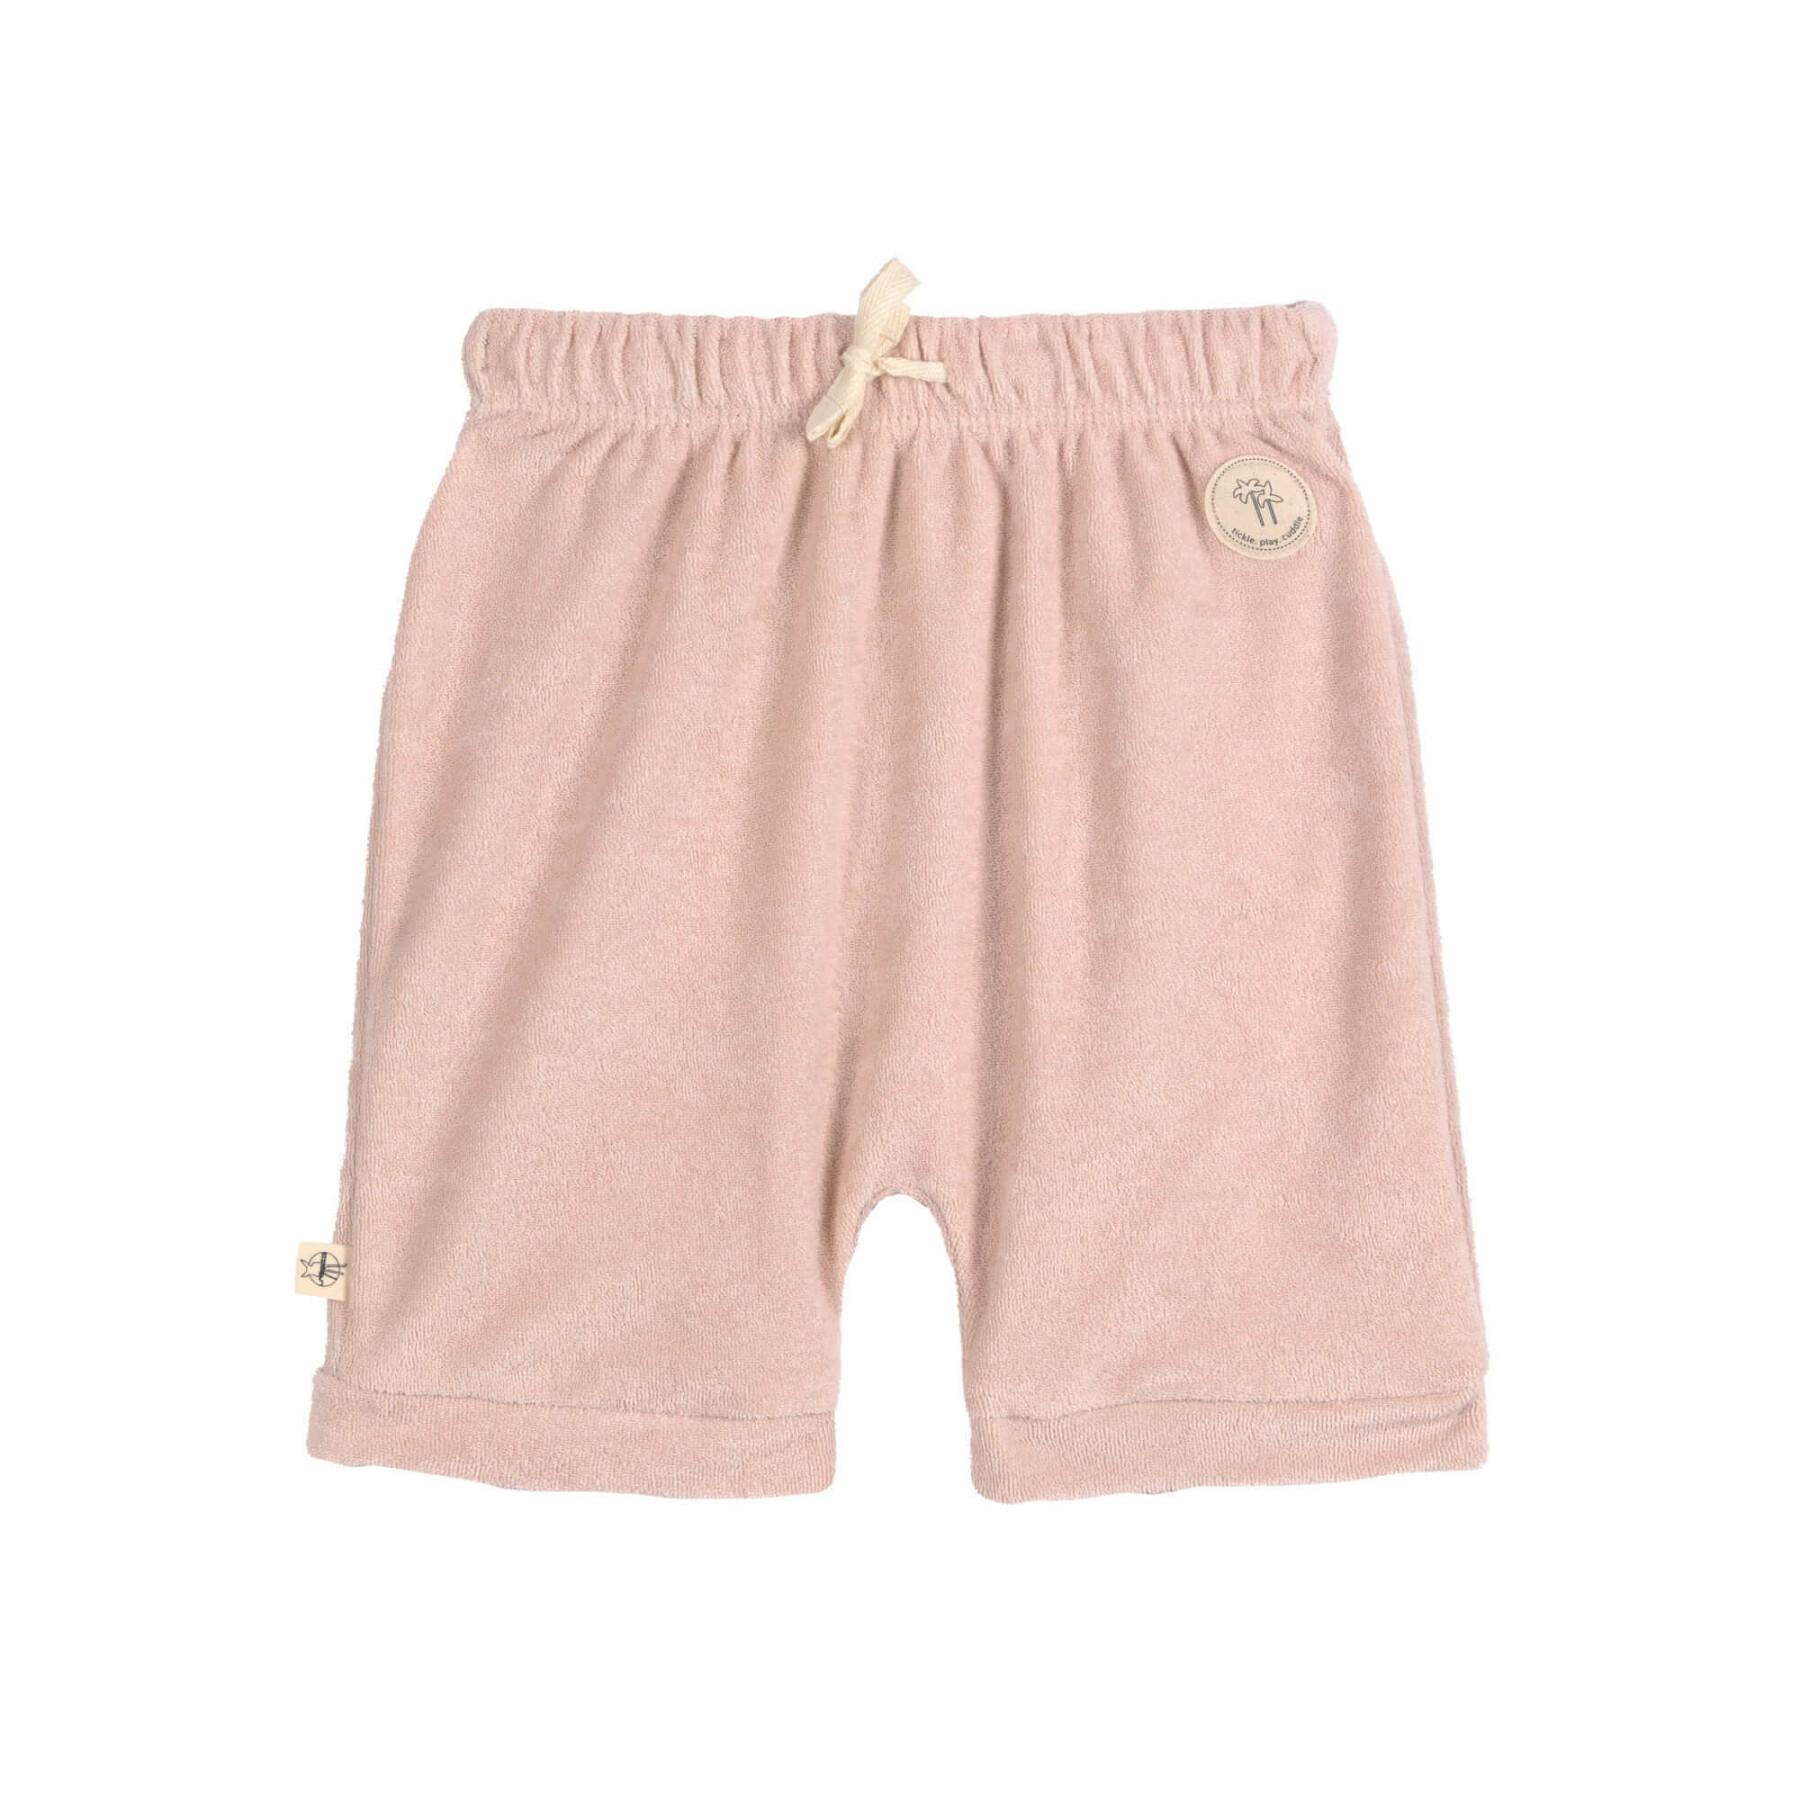 Pantalones cortos para bebés Lässig Terry